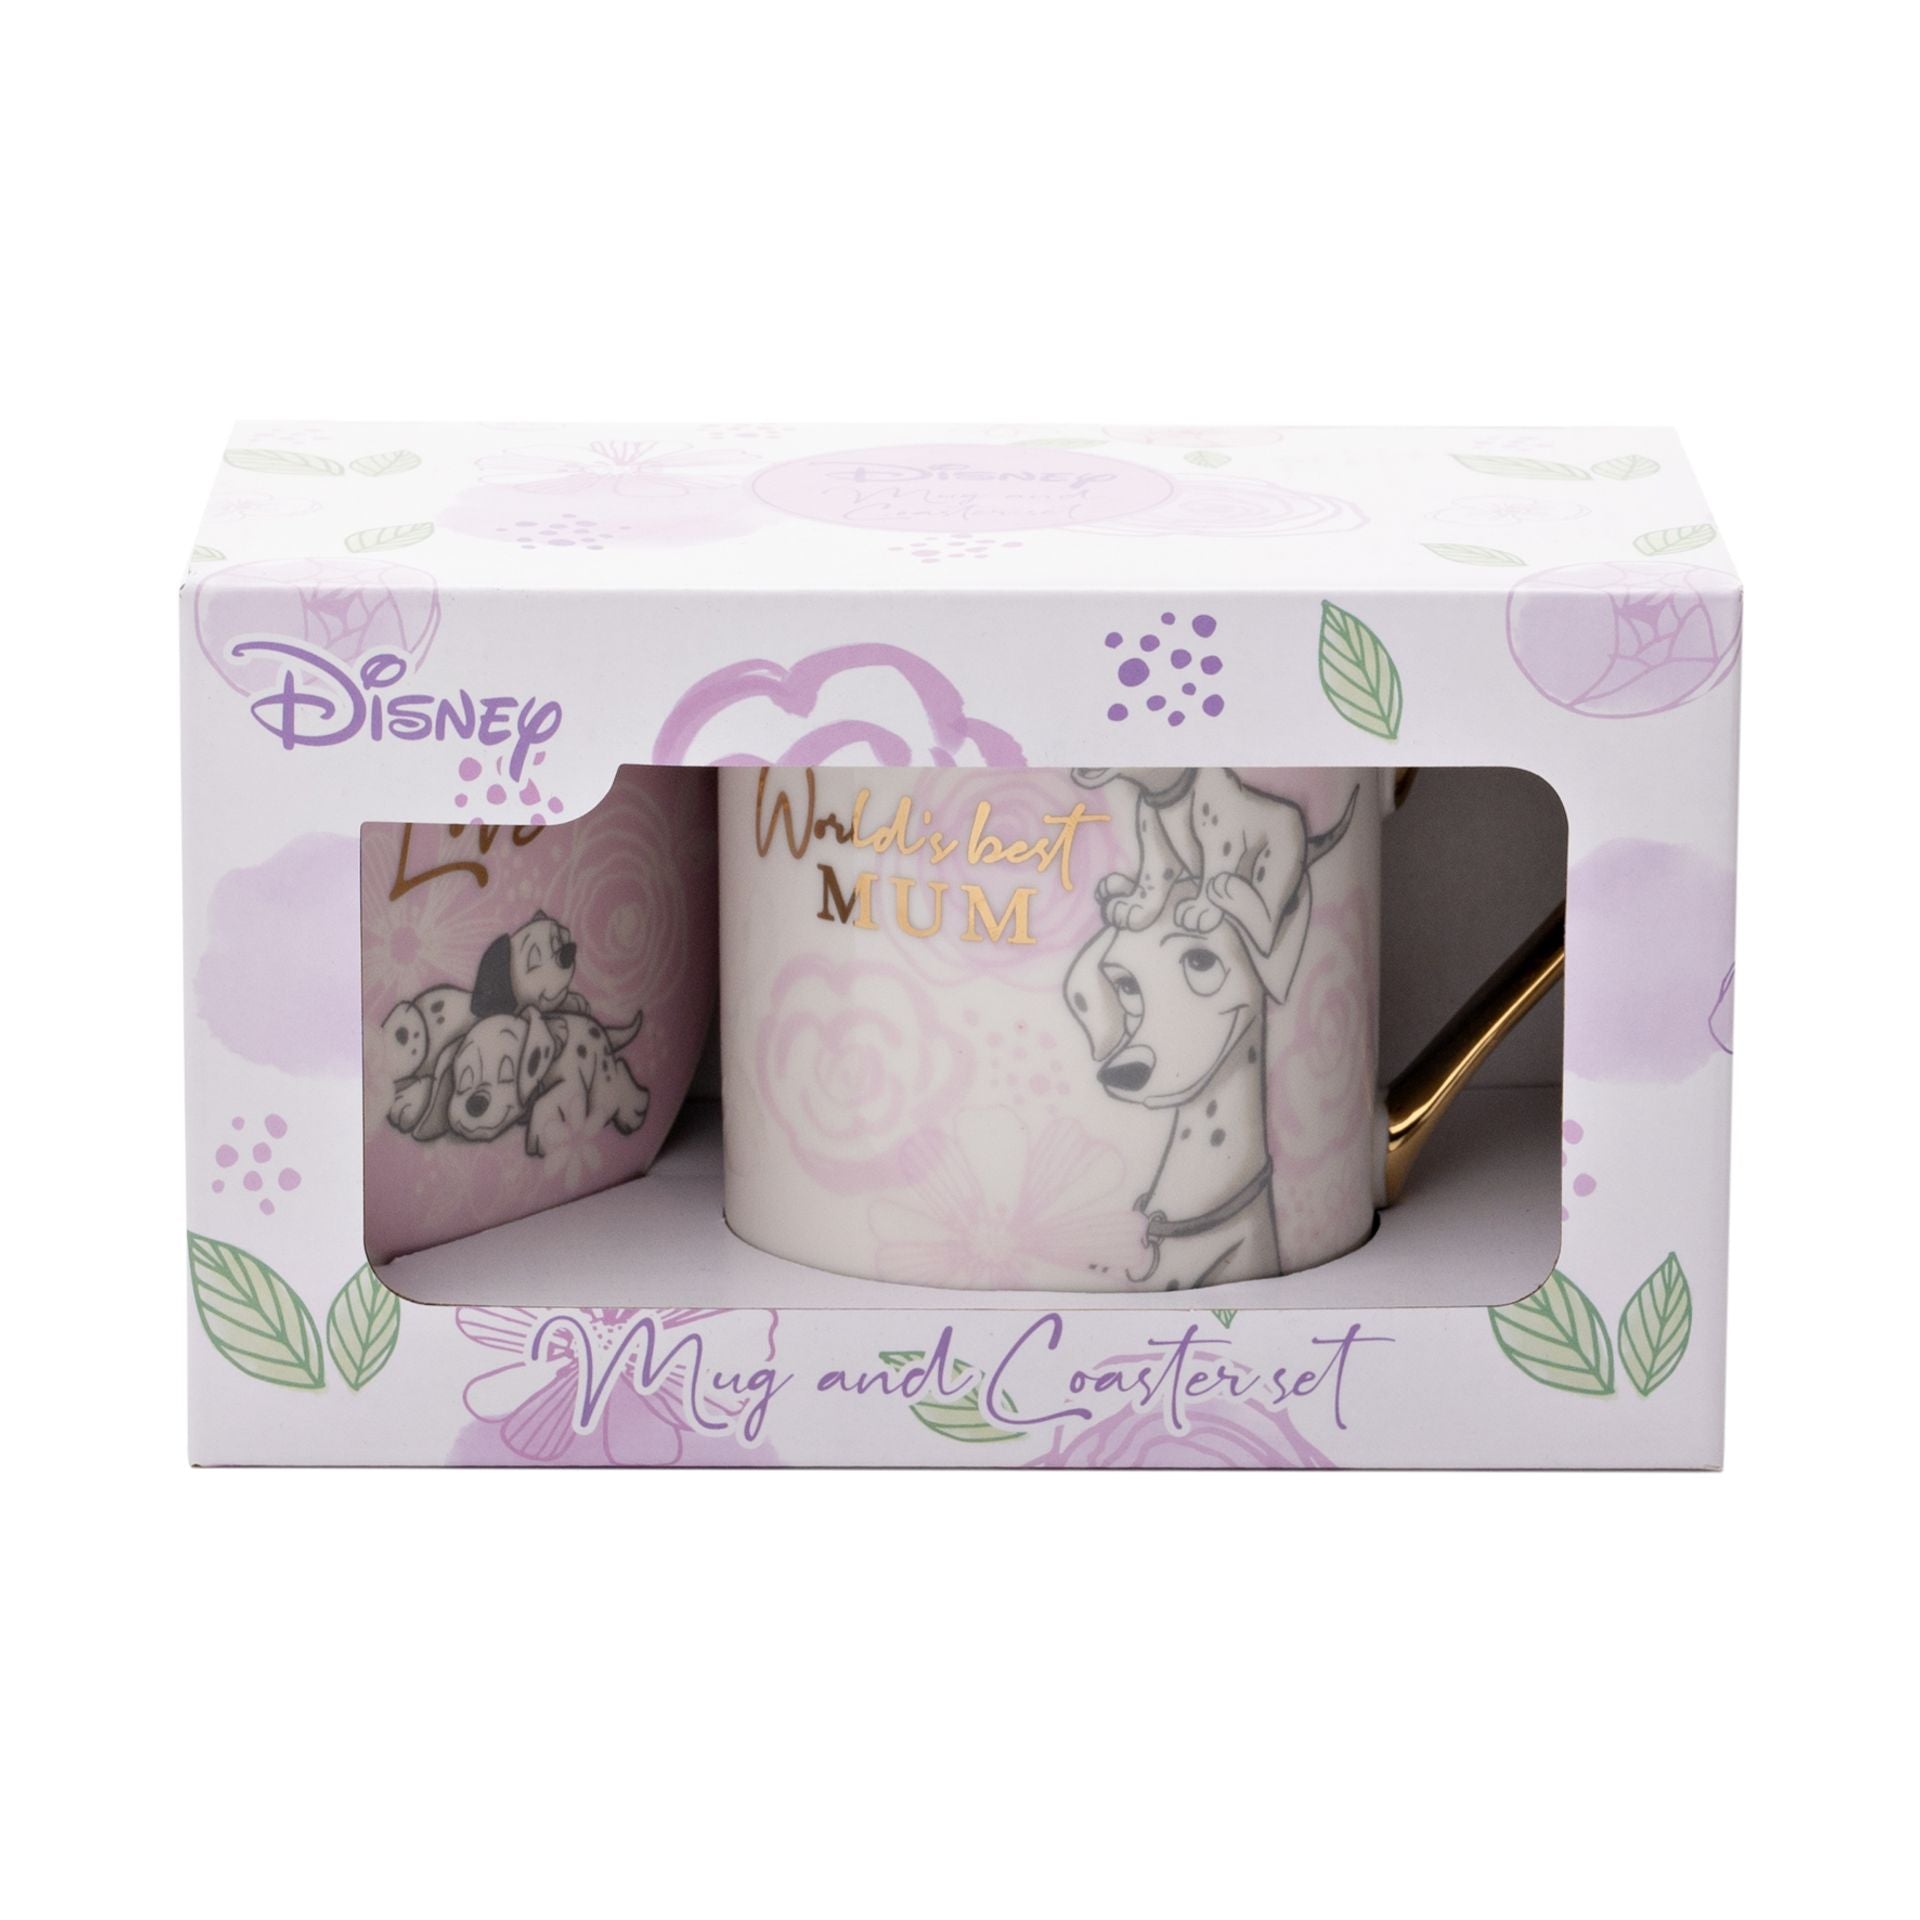 Disney Dalmatians Mug & Coaster Set - Mum - Penny Rose Home and Gifts